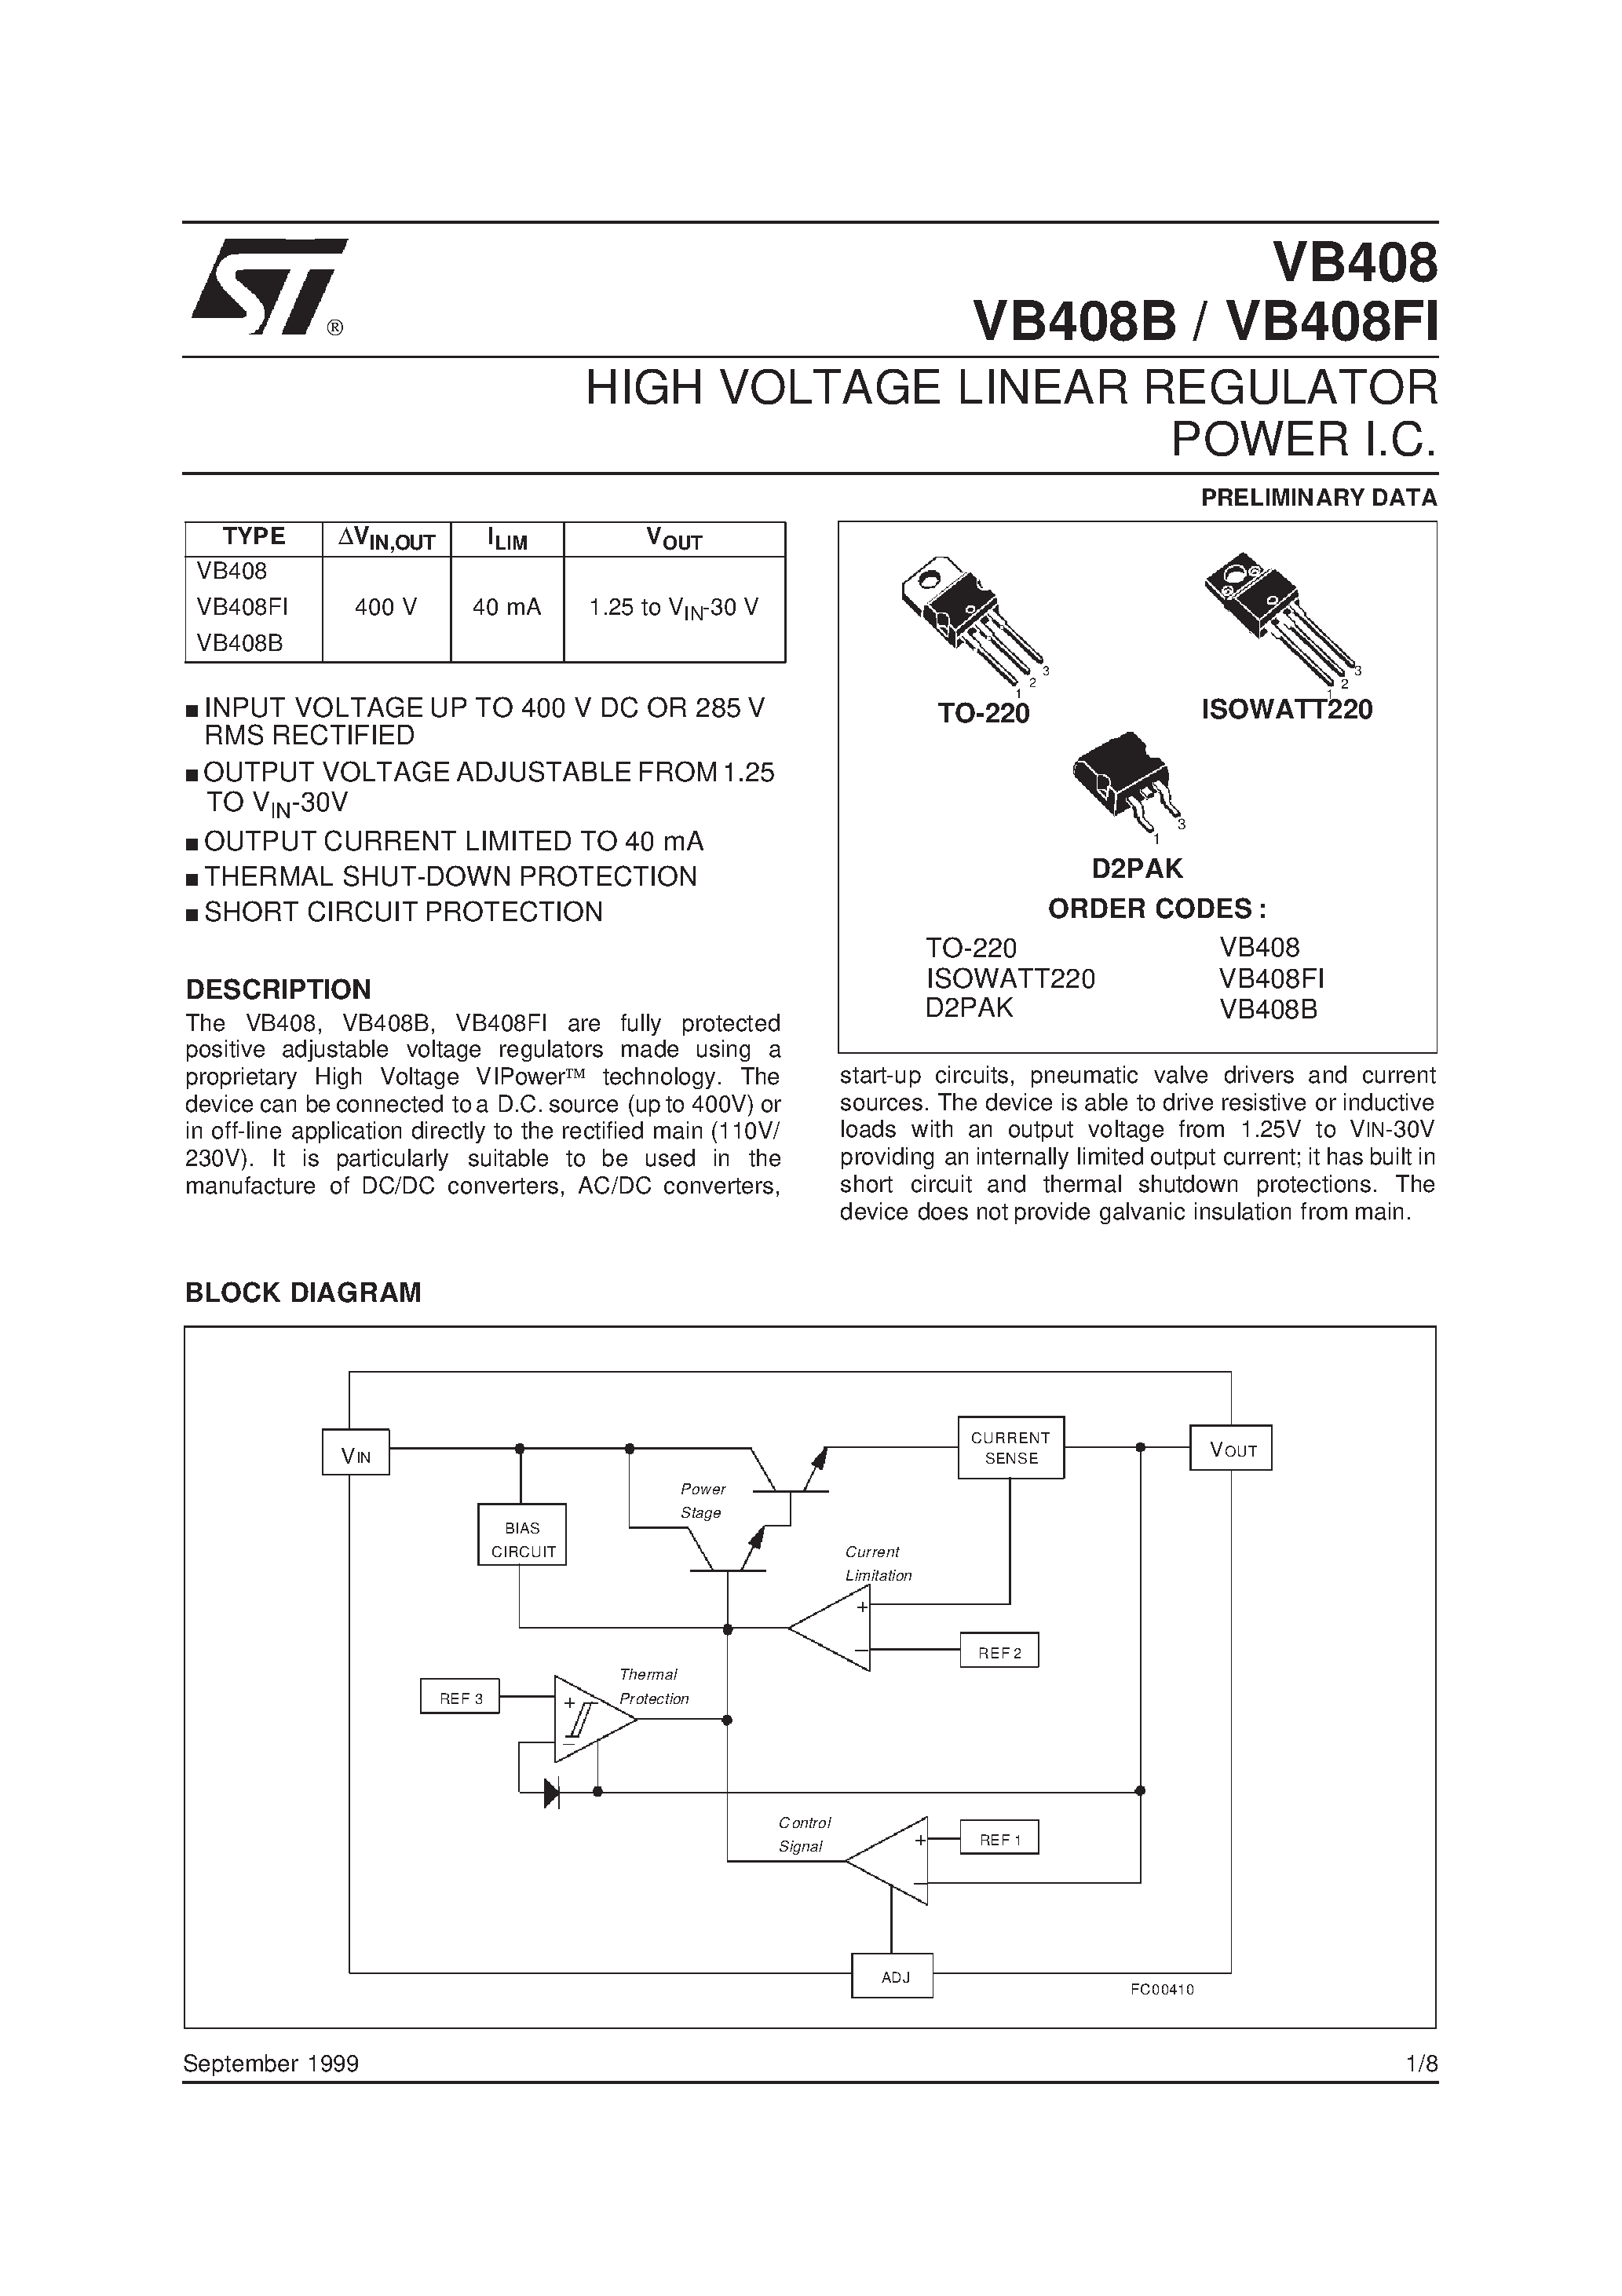 Datasheet VB408FI - HIGH VOLTAGE LINEAR REGULATOR POWER I.C. page 1